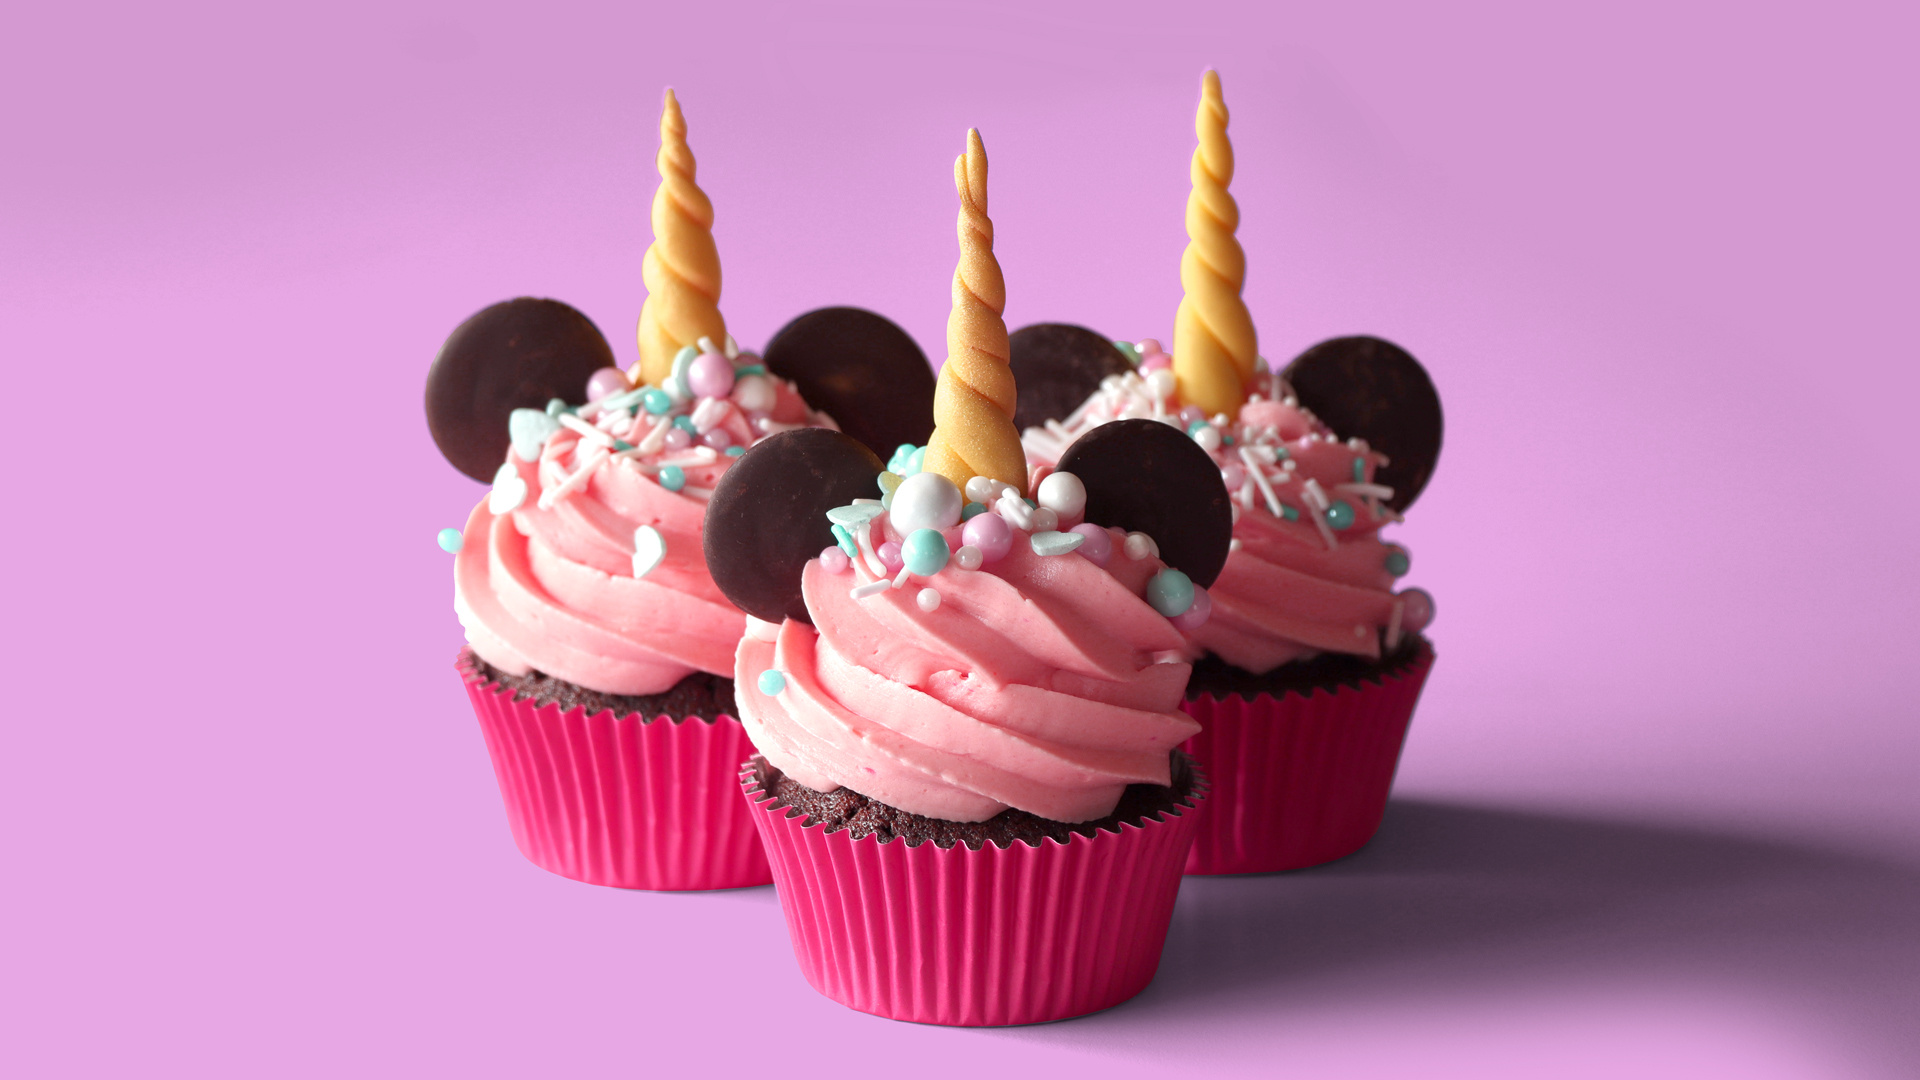 Disney unicorn cupcakes, Magical treats, Colorful and fun, Whimsical delight, 1920x1080 Full HD Desktop